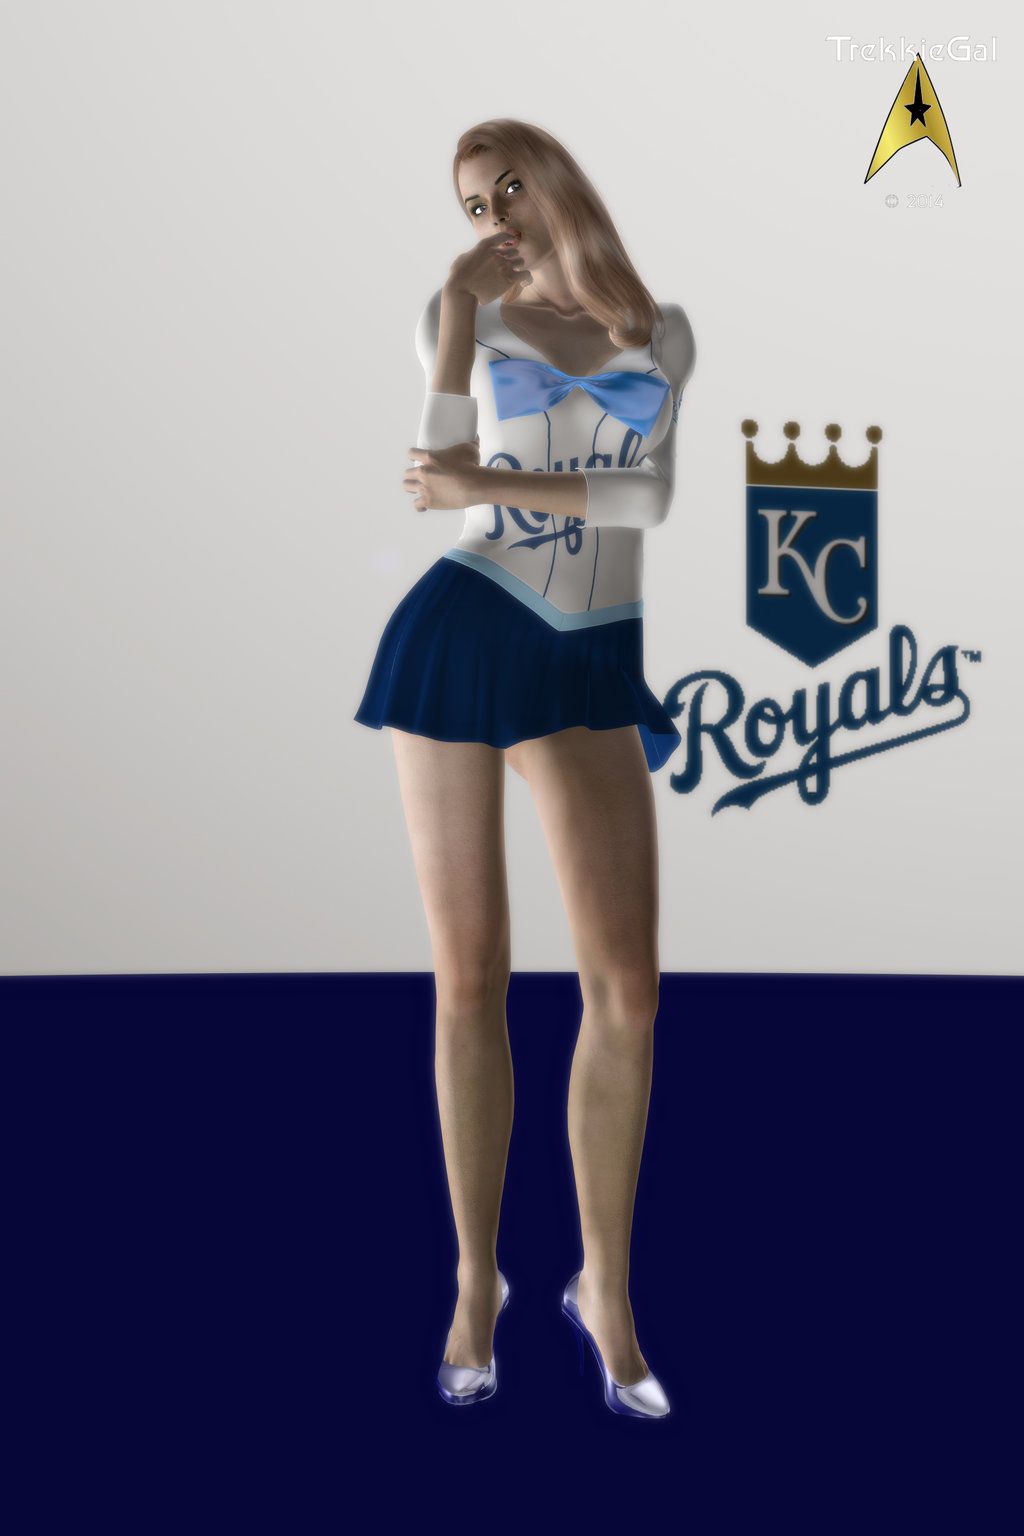 2014 Kansas City Royals by TrekkieGal on DeviantArt